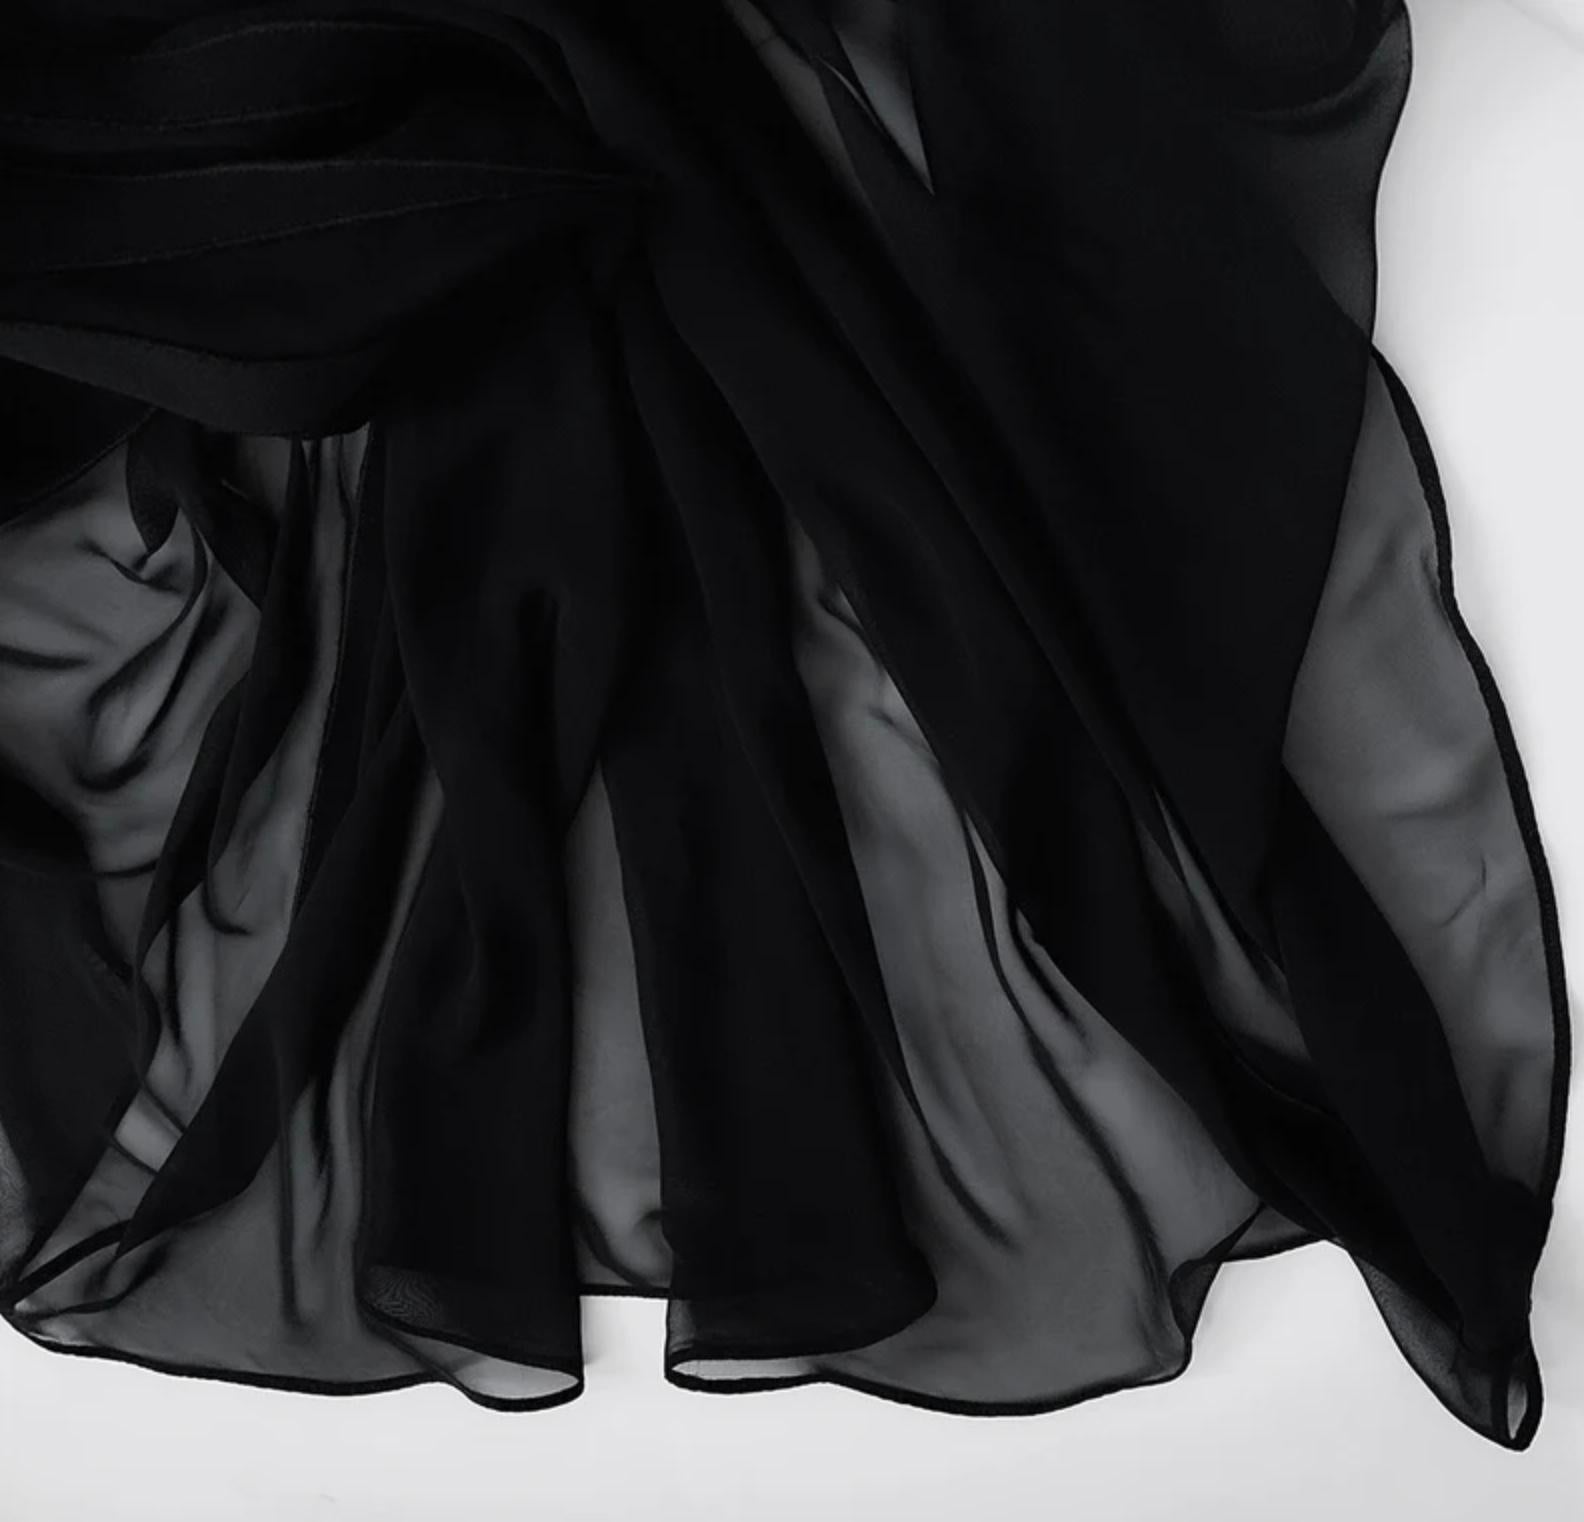 Devine Thierry Mugler Runway Dress Goddess Black Semi Sheer Evening Gown  For Sale 8